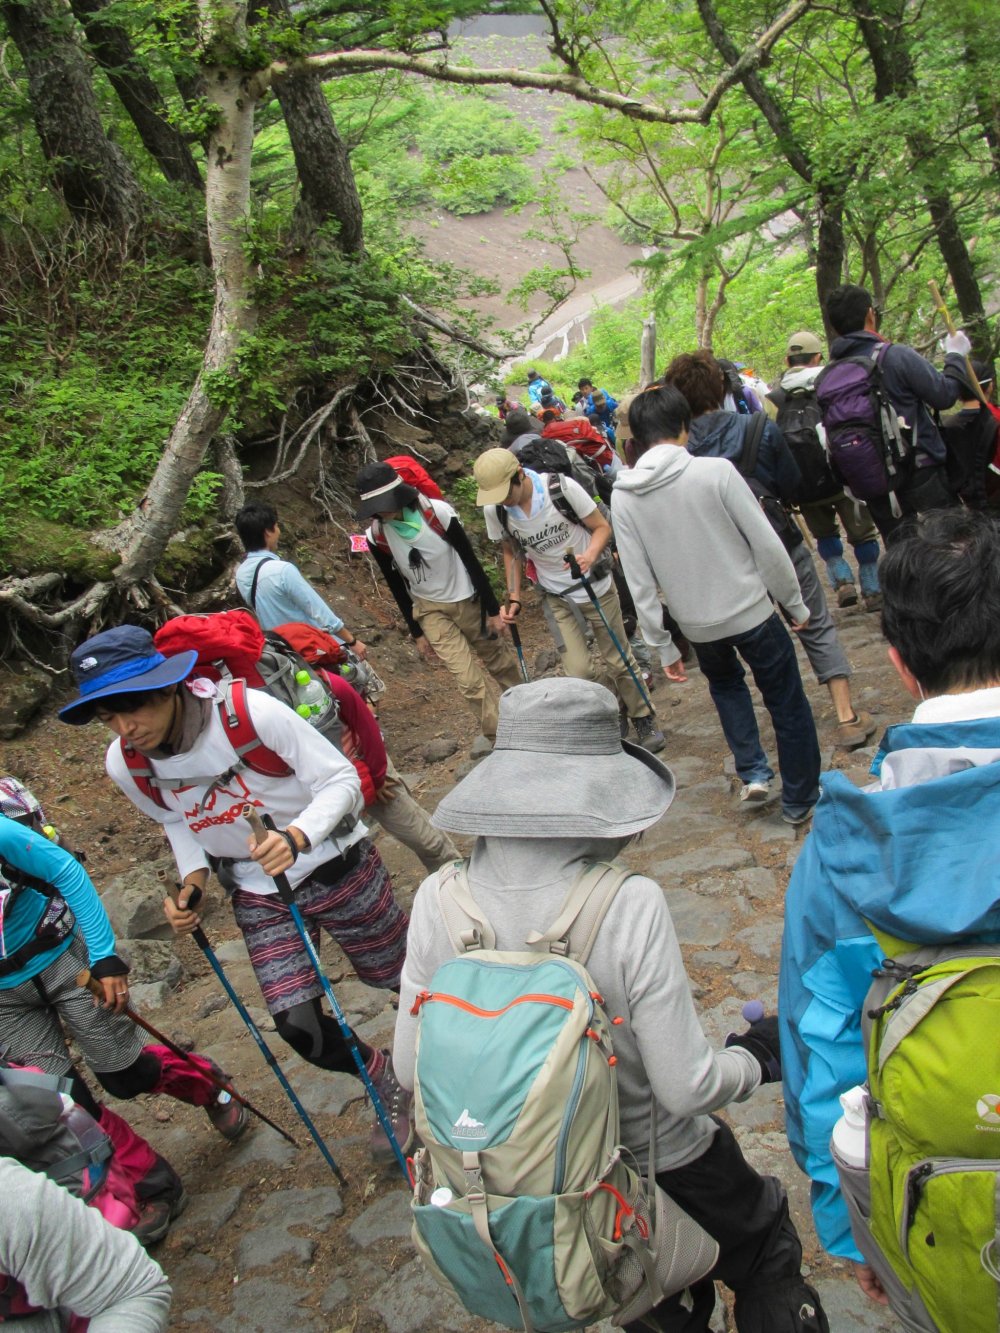 Many people hike up Mount Fuji each year.